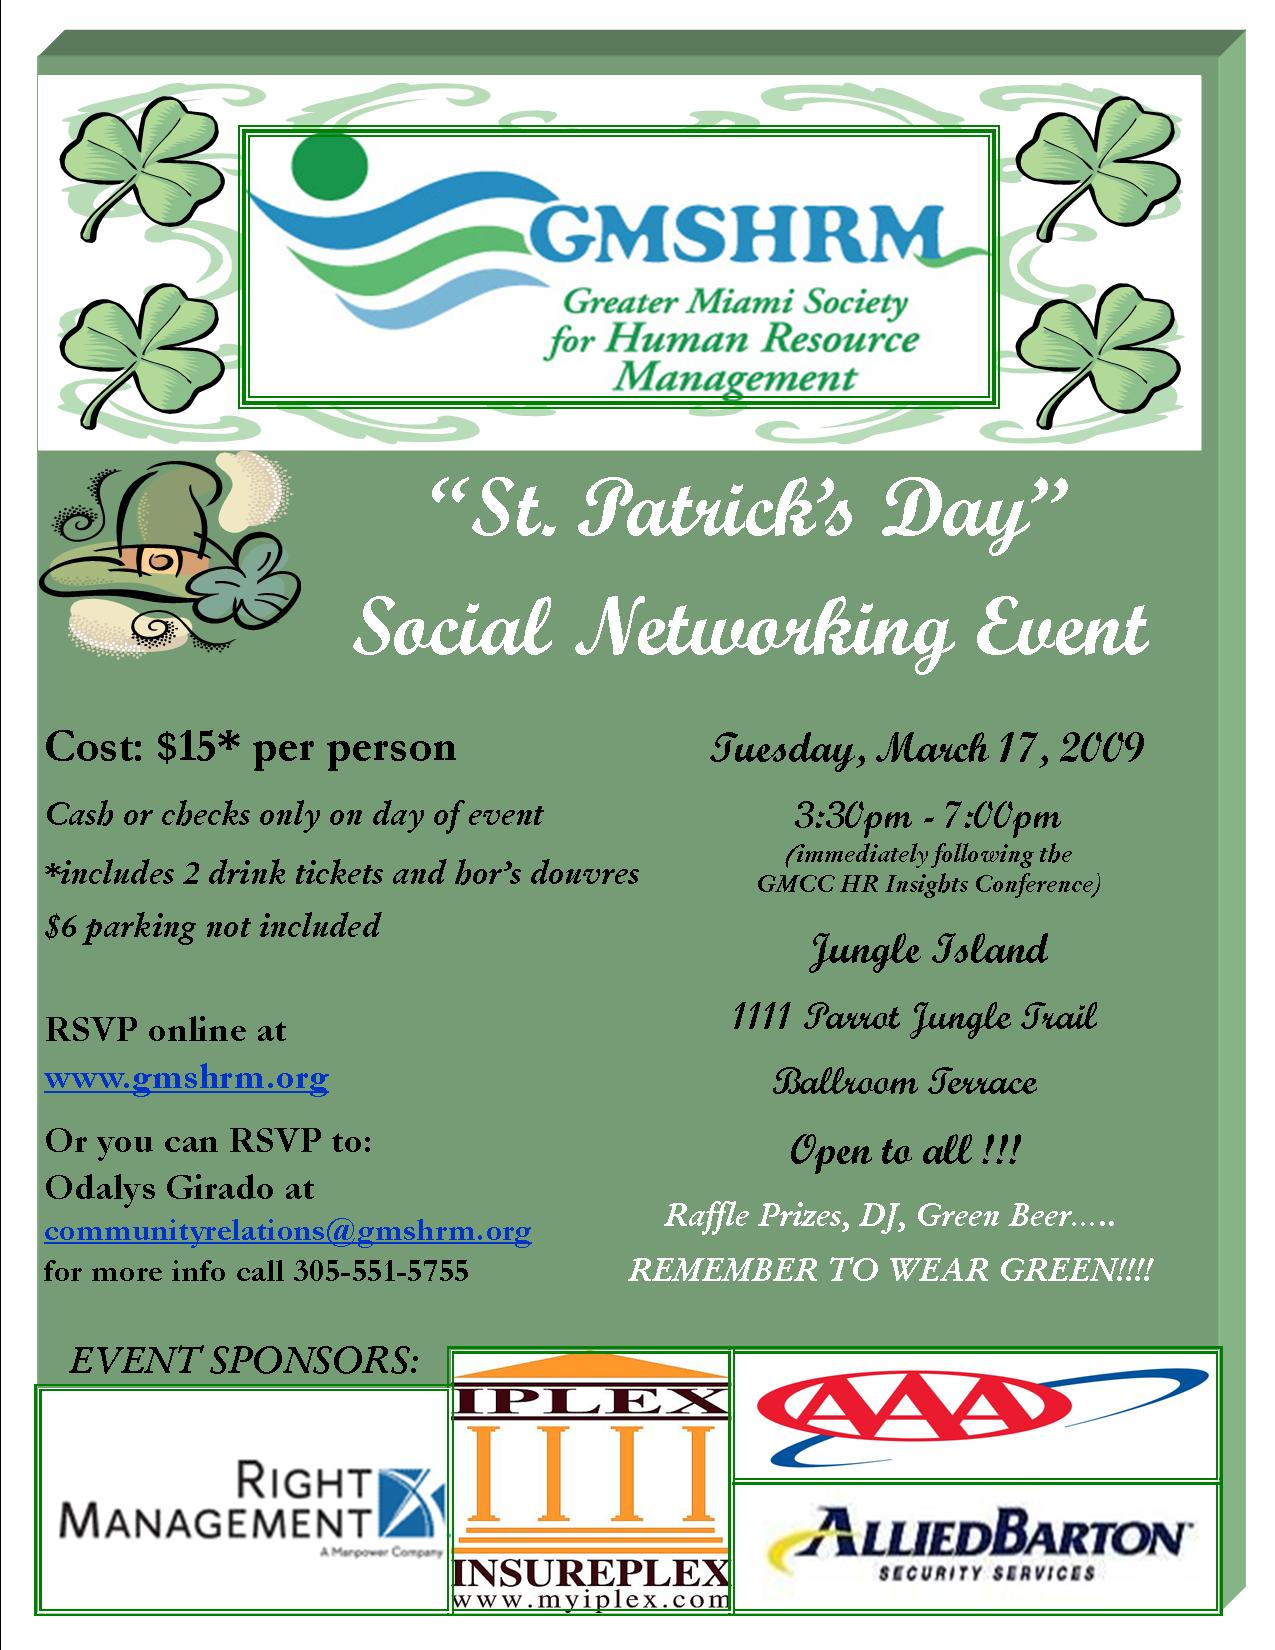 gmshrm-social-networker-flyer-3-17-09-final